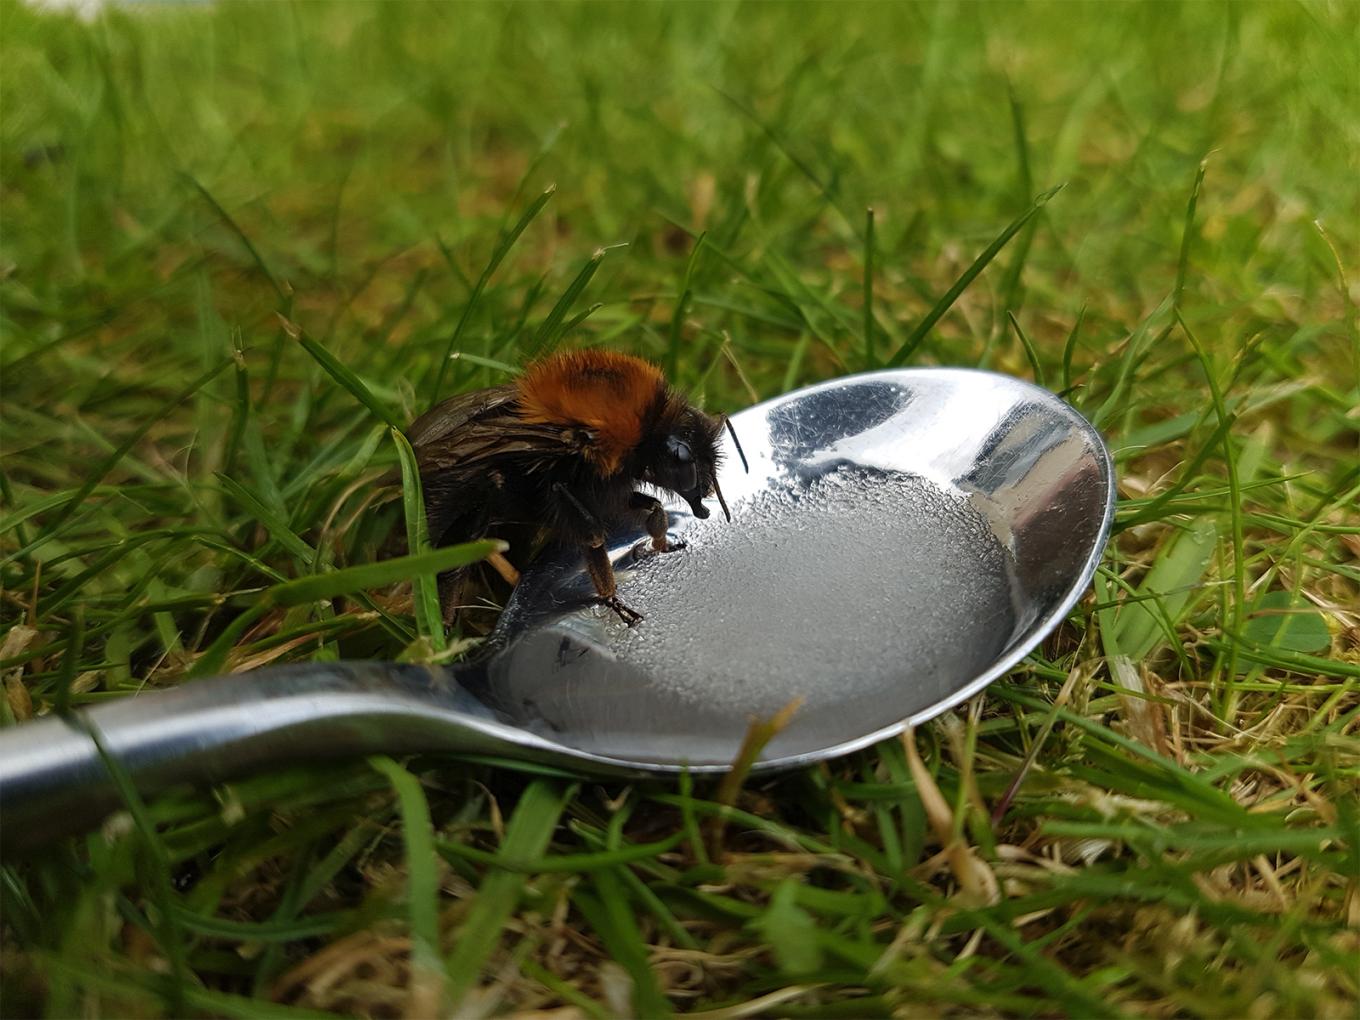 A bee feeding from sugar on a spoon